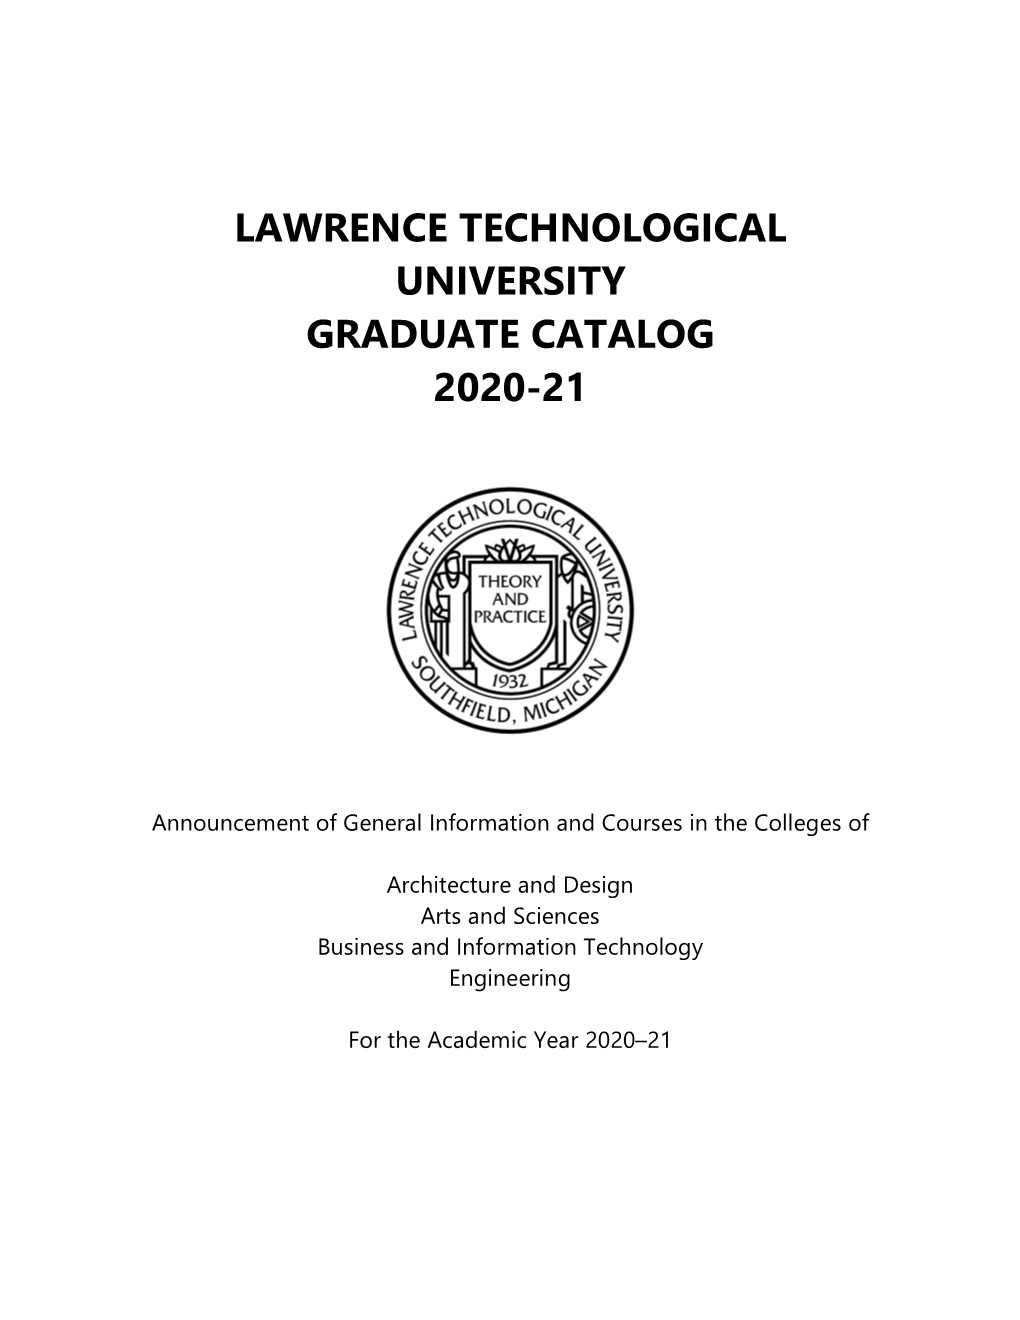 Download the 2020-21 Graduate Catalog